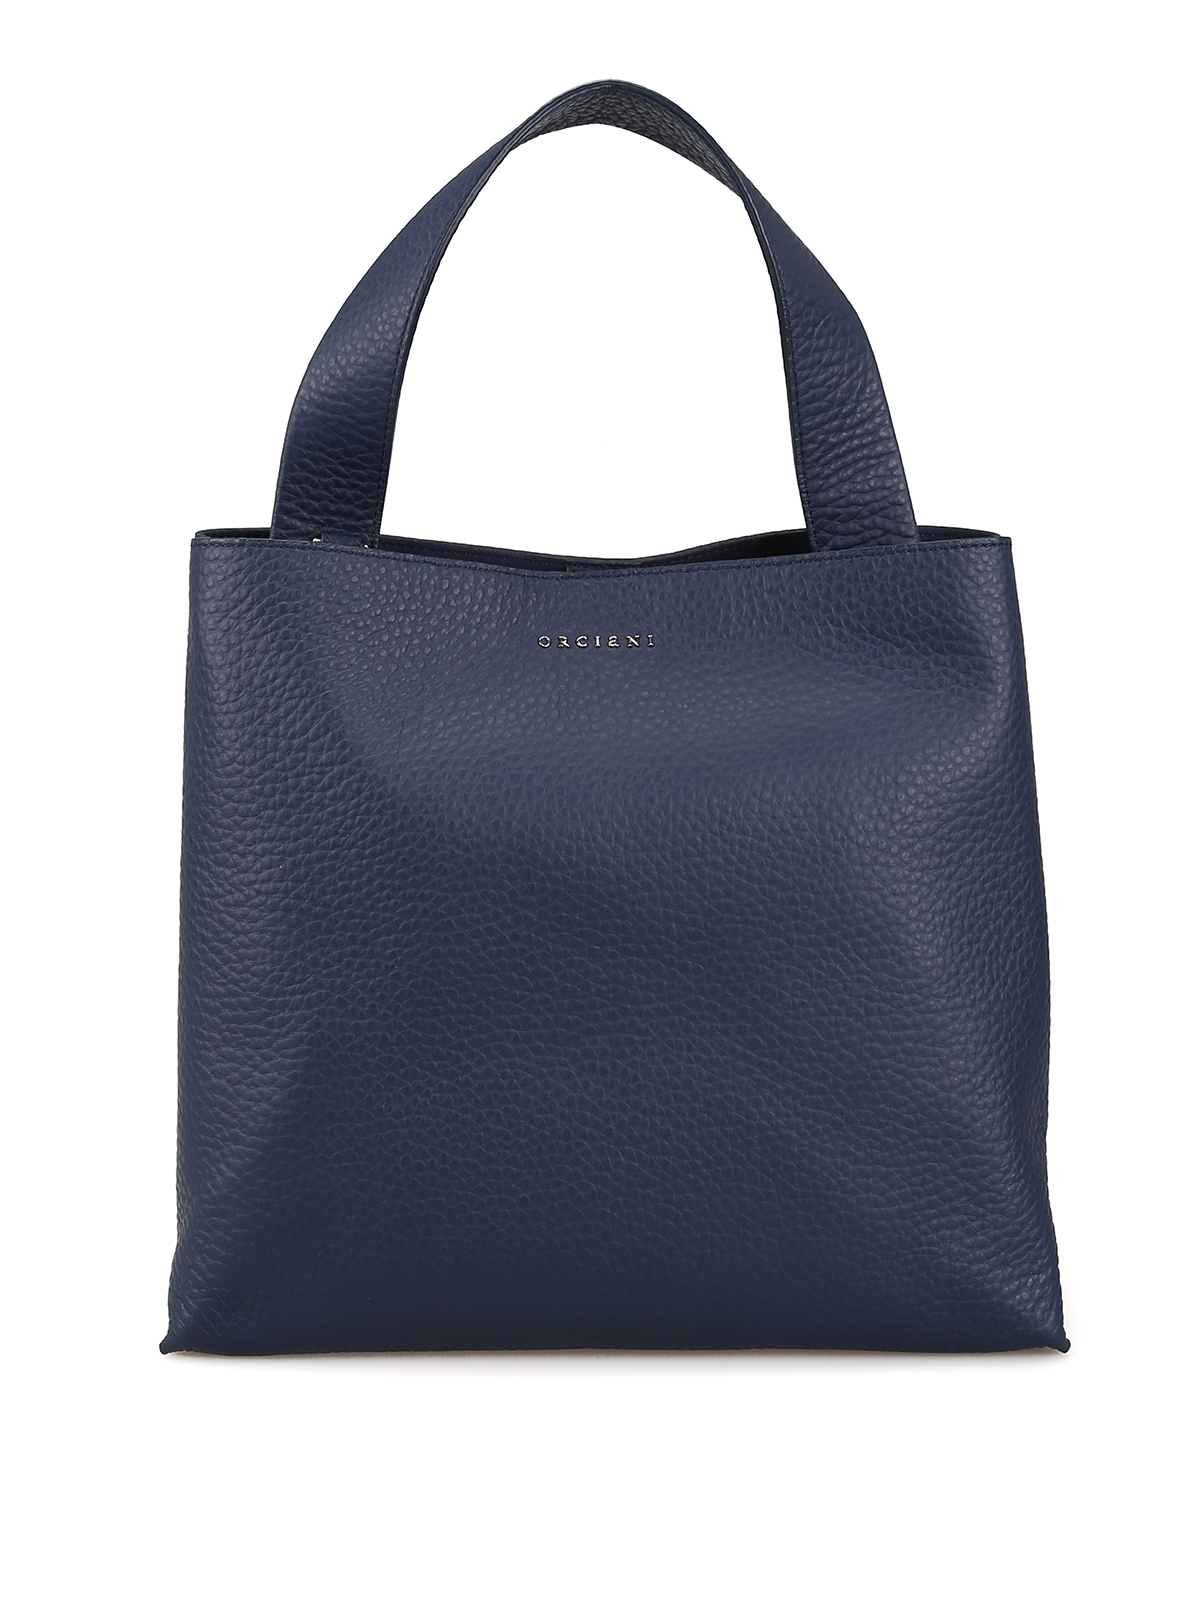 Orciani Women's Handbag - Blue - Satchels